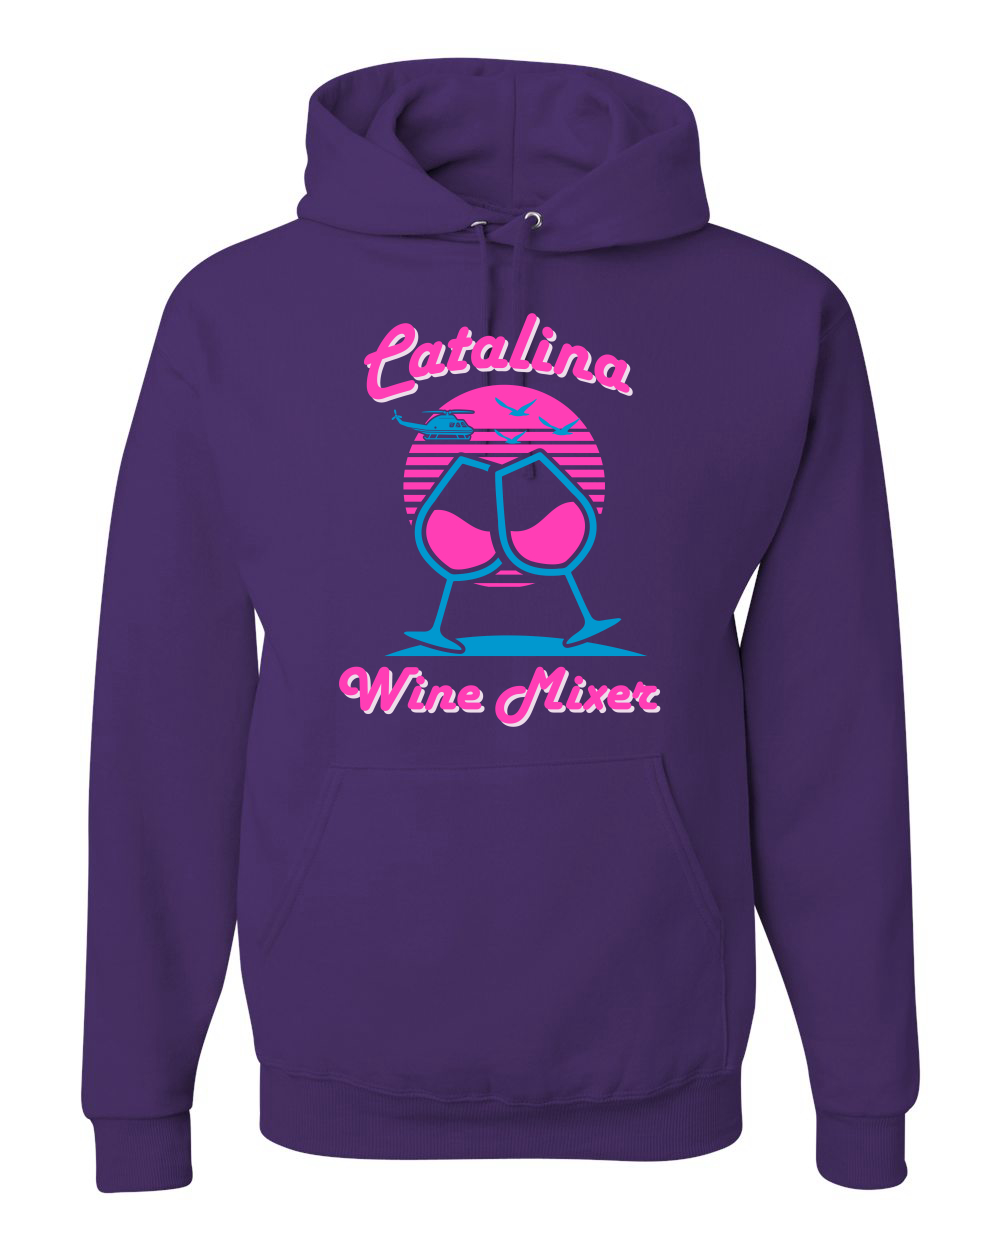 Catalina Wine Mixer Island Prestige Movie| Mens Pop Culture Hooded Sweatshirt Graphic Hoodie, Purple, Large - image 1 of 4